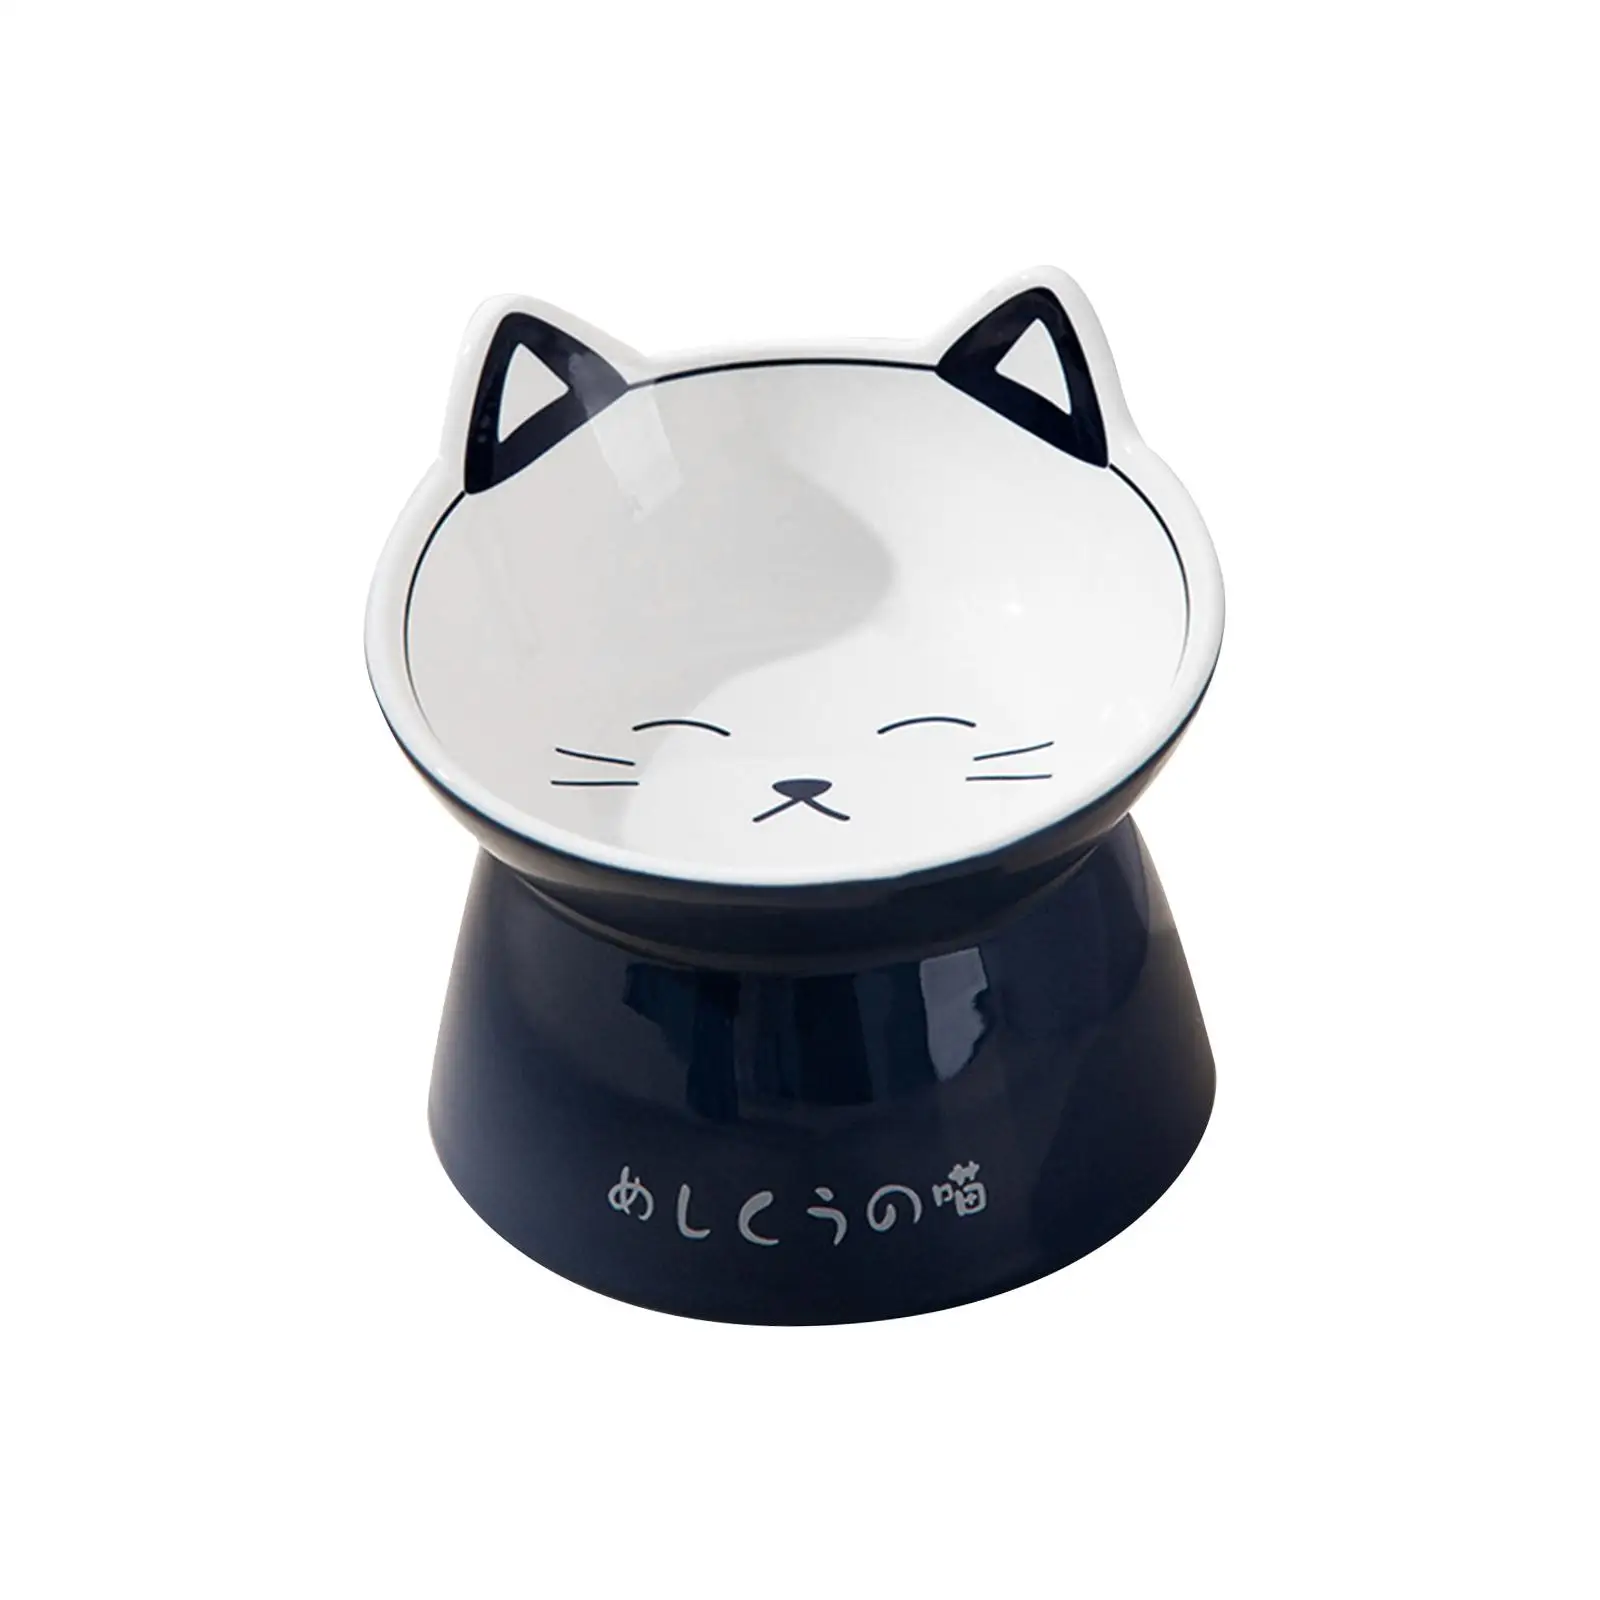 Ceramic Raised Cat Food Bowl dish Accessory Sturdy Cat Feeding Watering Supplies Porcelain Bowl Minimalist Anti Slip